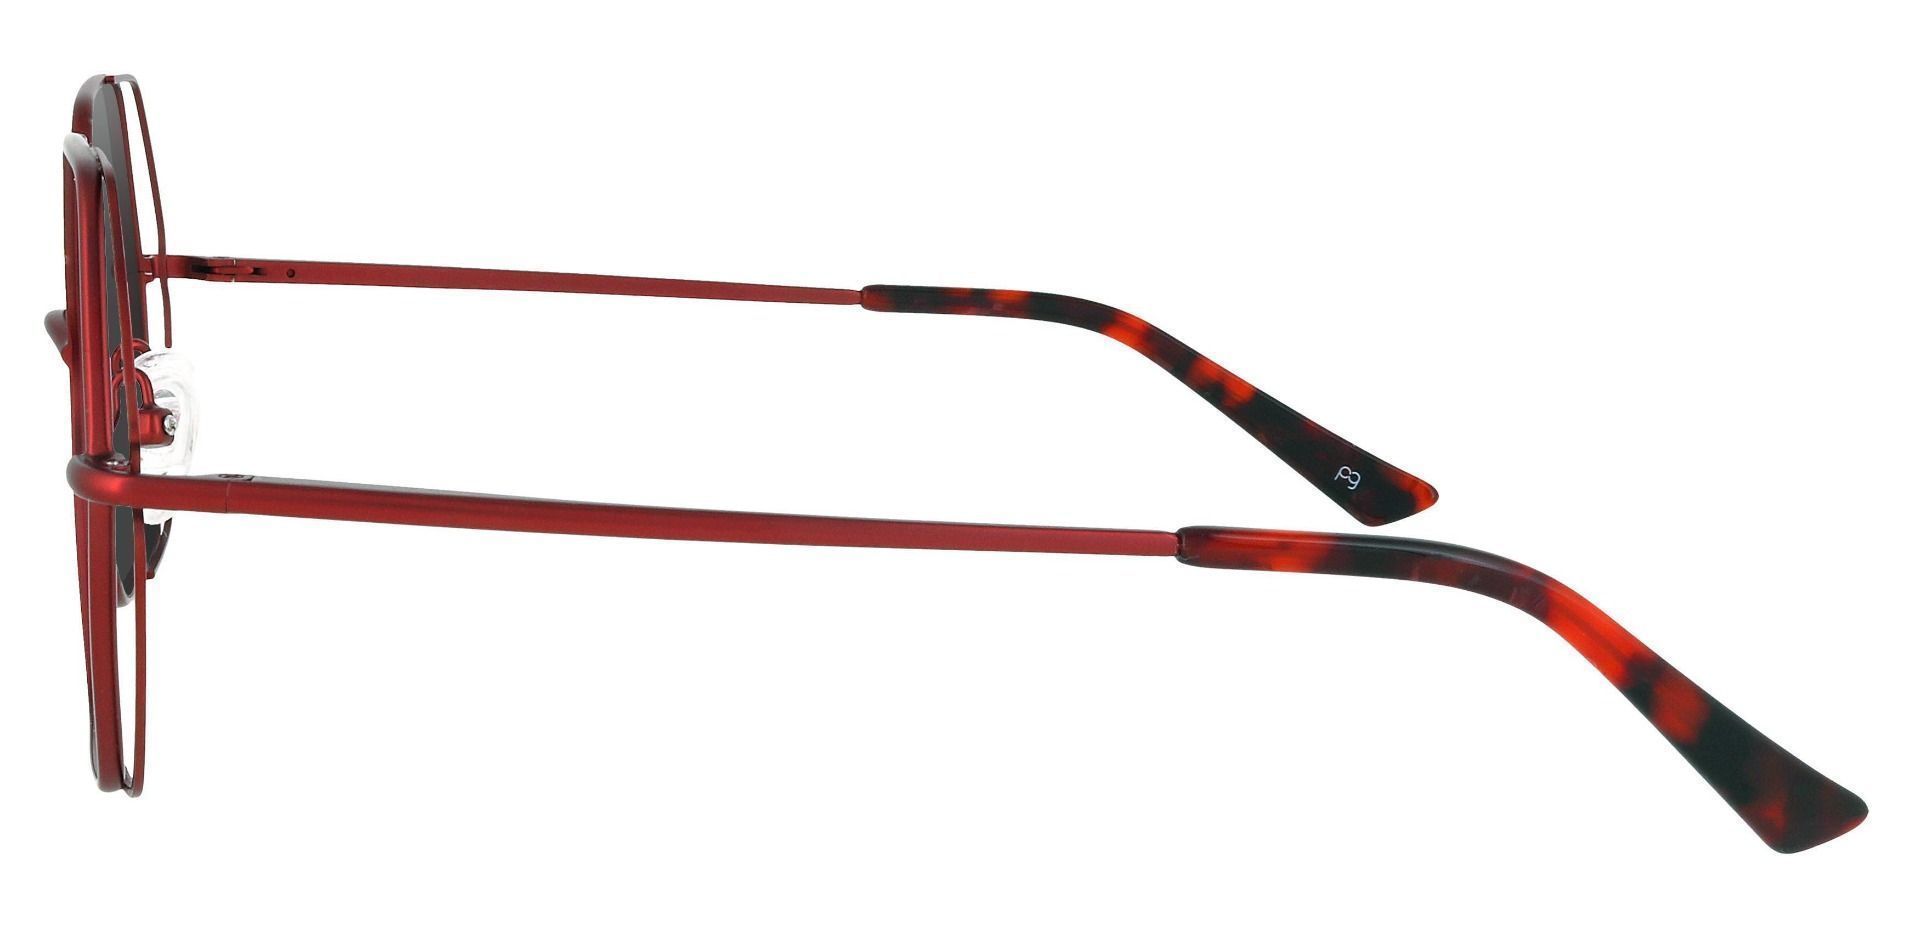 Hawley Geometric Progressive Sunglasses - Red Frame With Gray Lenses